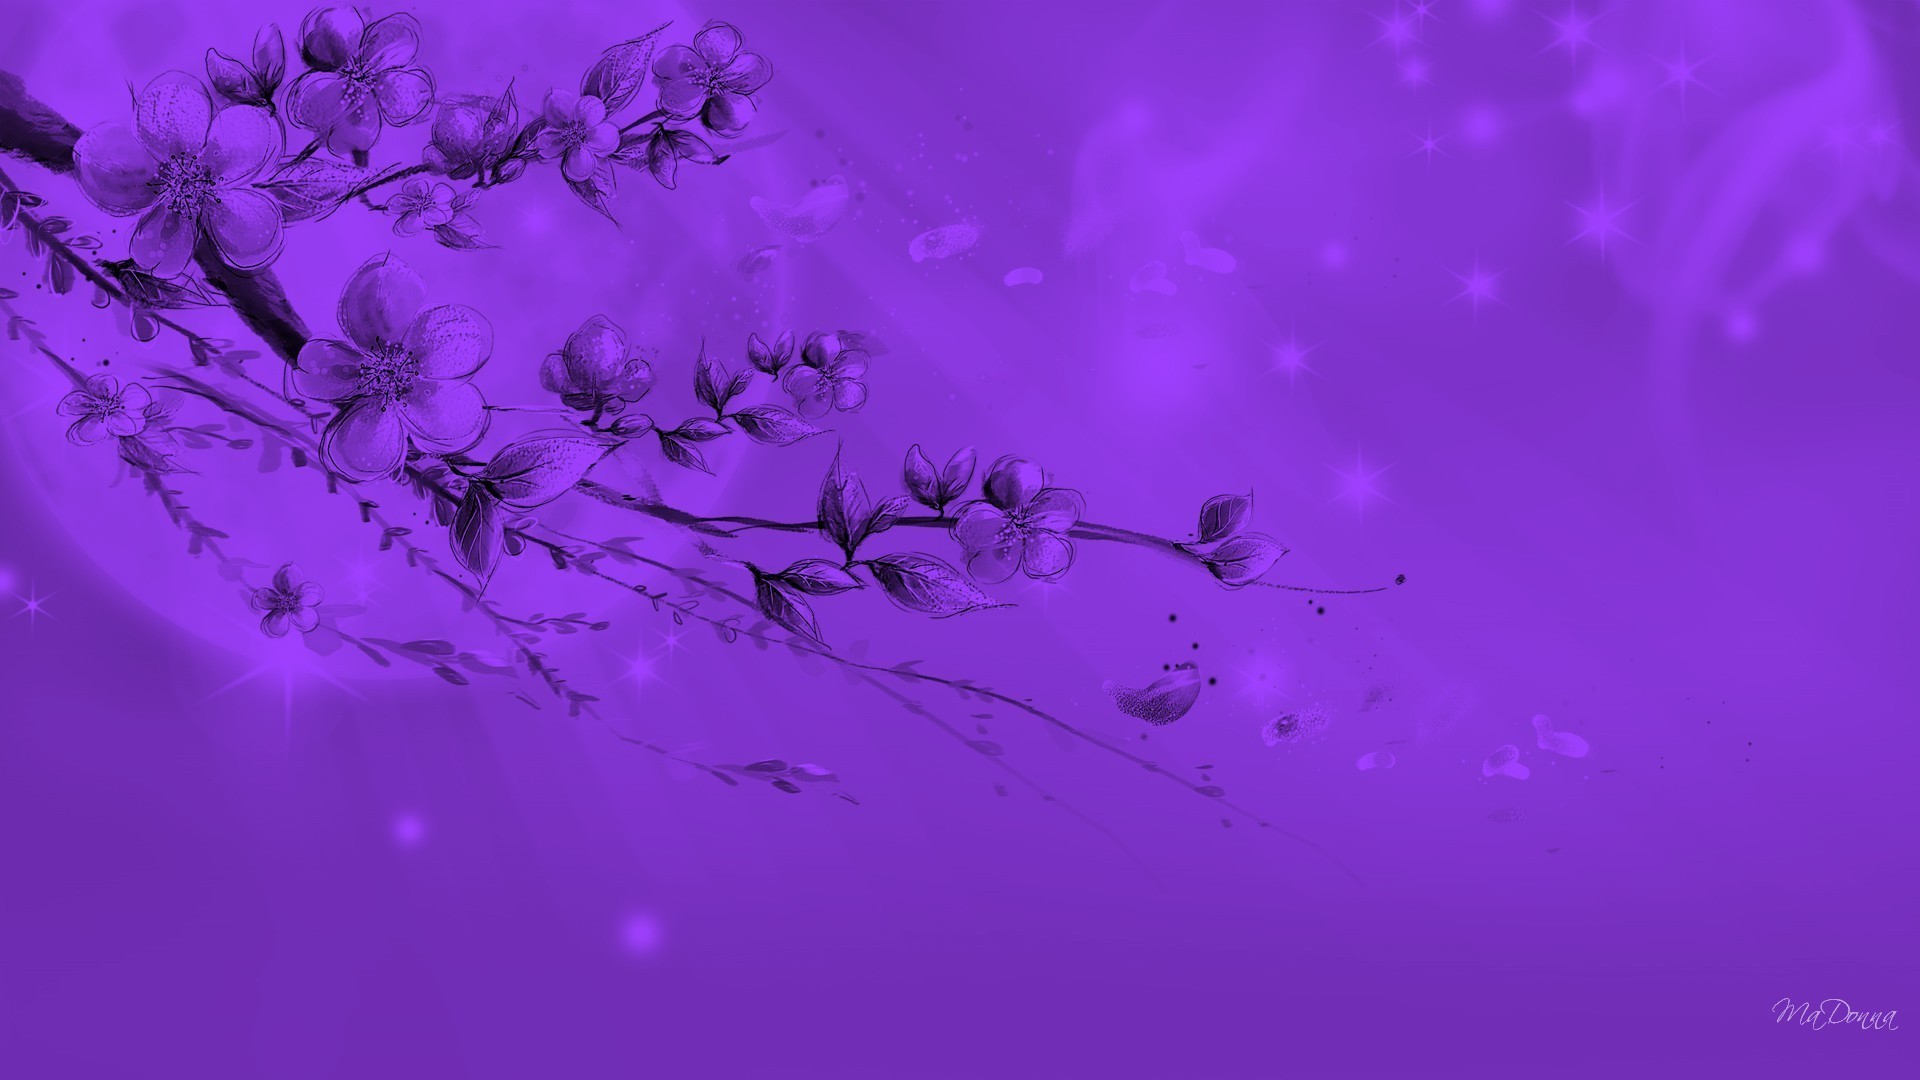 #9966CC Color – Abstract Dream Tree Persona Blossoms Firefox Sky Purple  Petals Sakura Cherry Aster